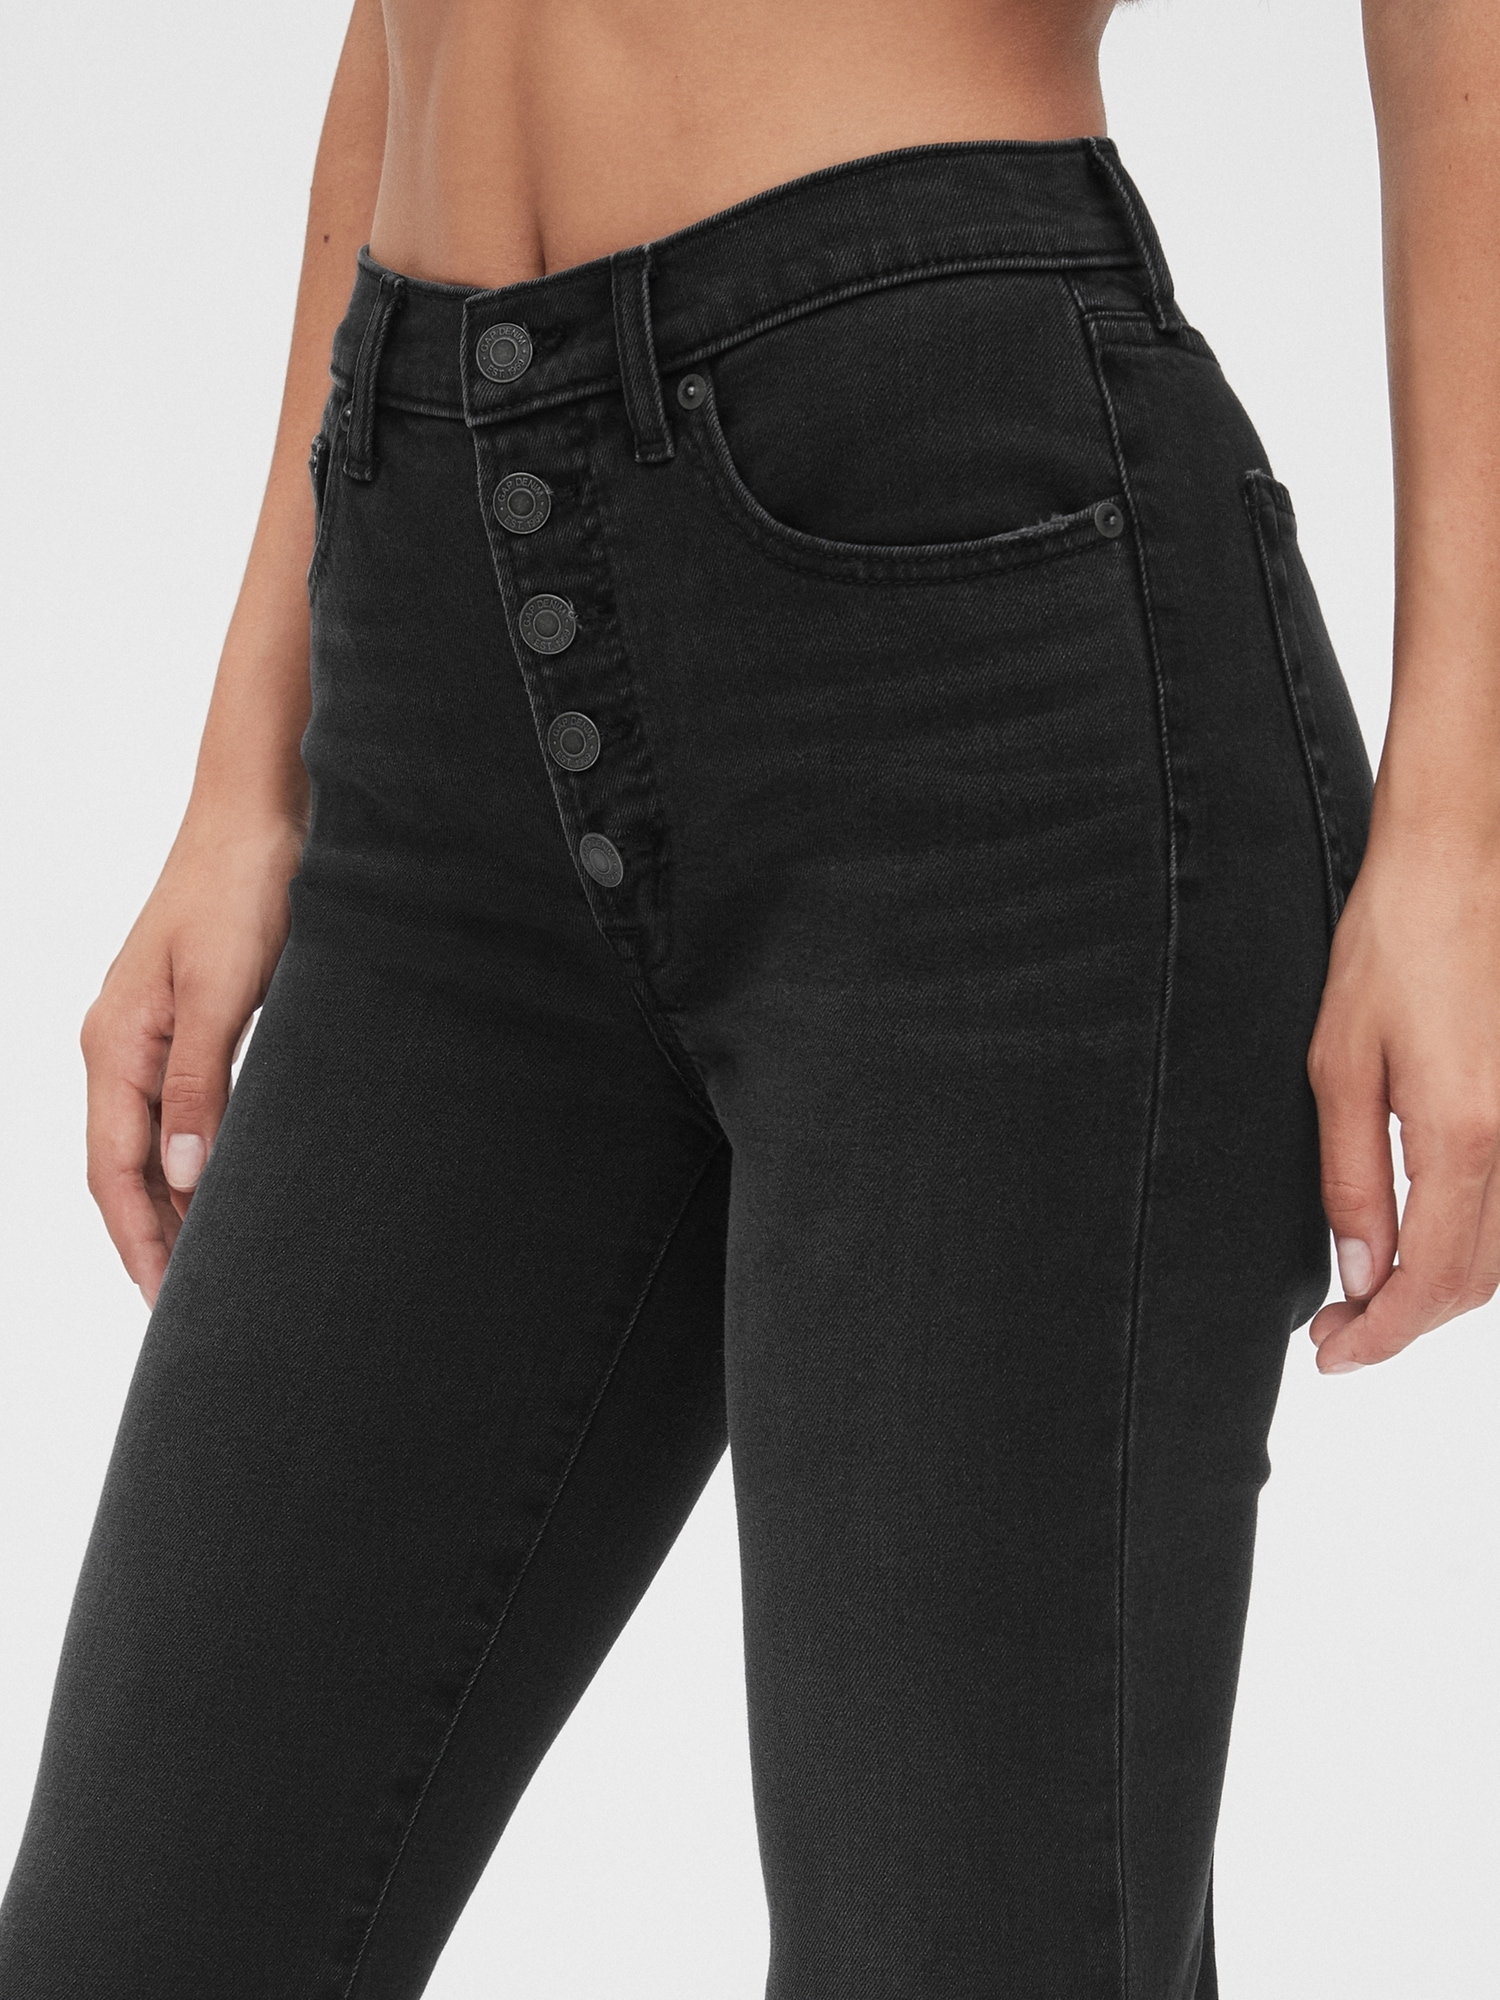 gap high waisted black jeans